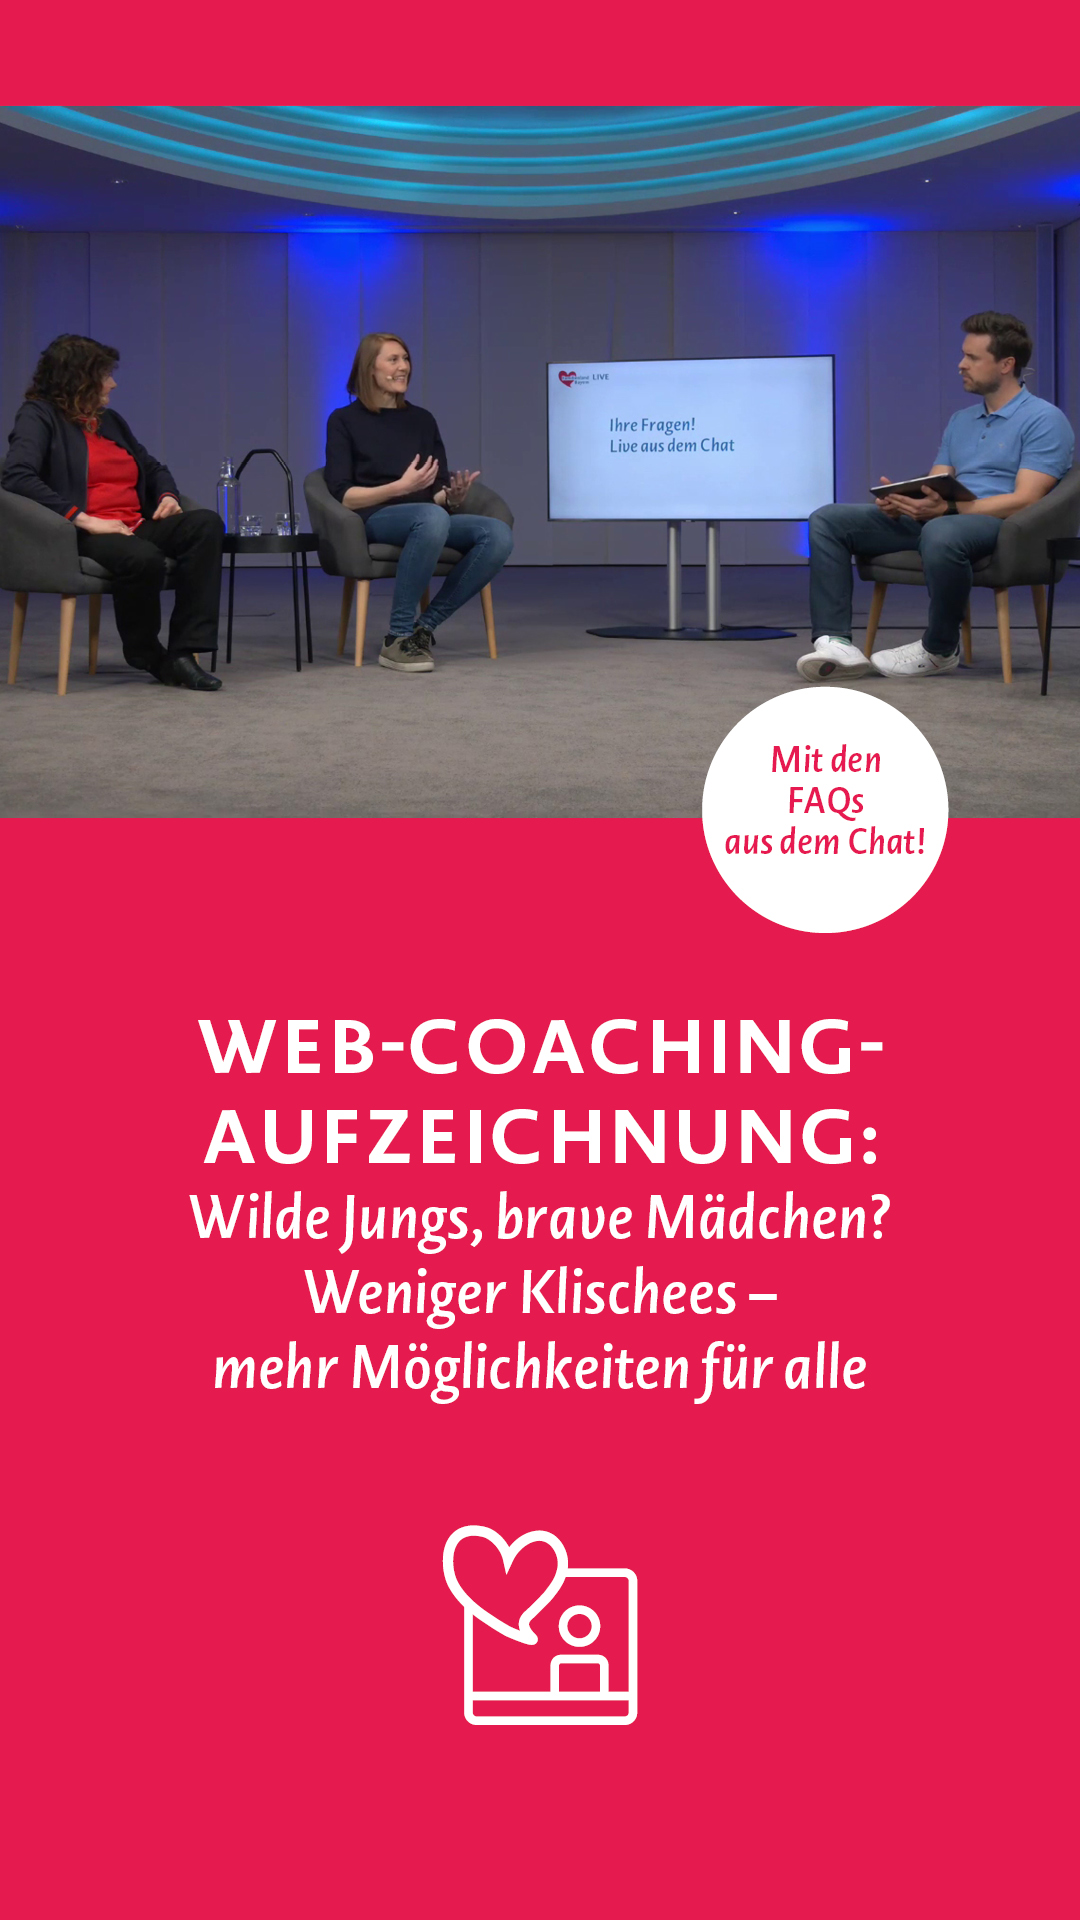 Web-Coaching_17_Aufzeichnung_Story_1080x1920.jpg